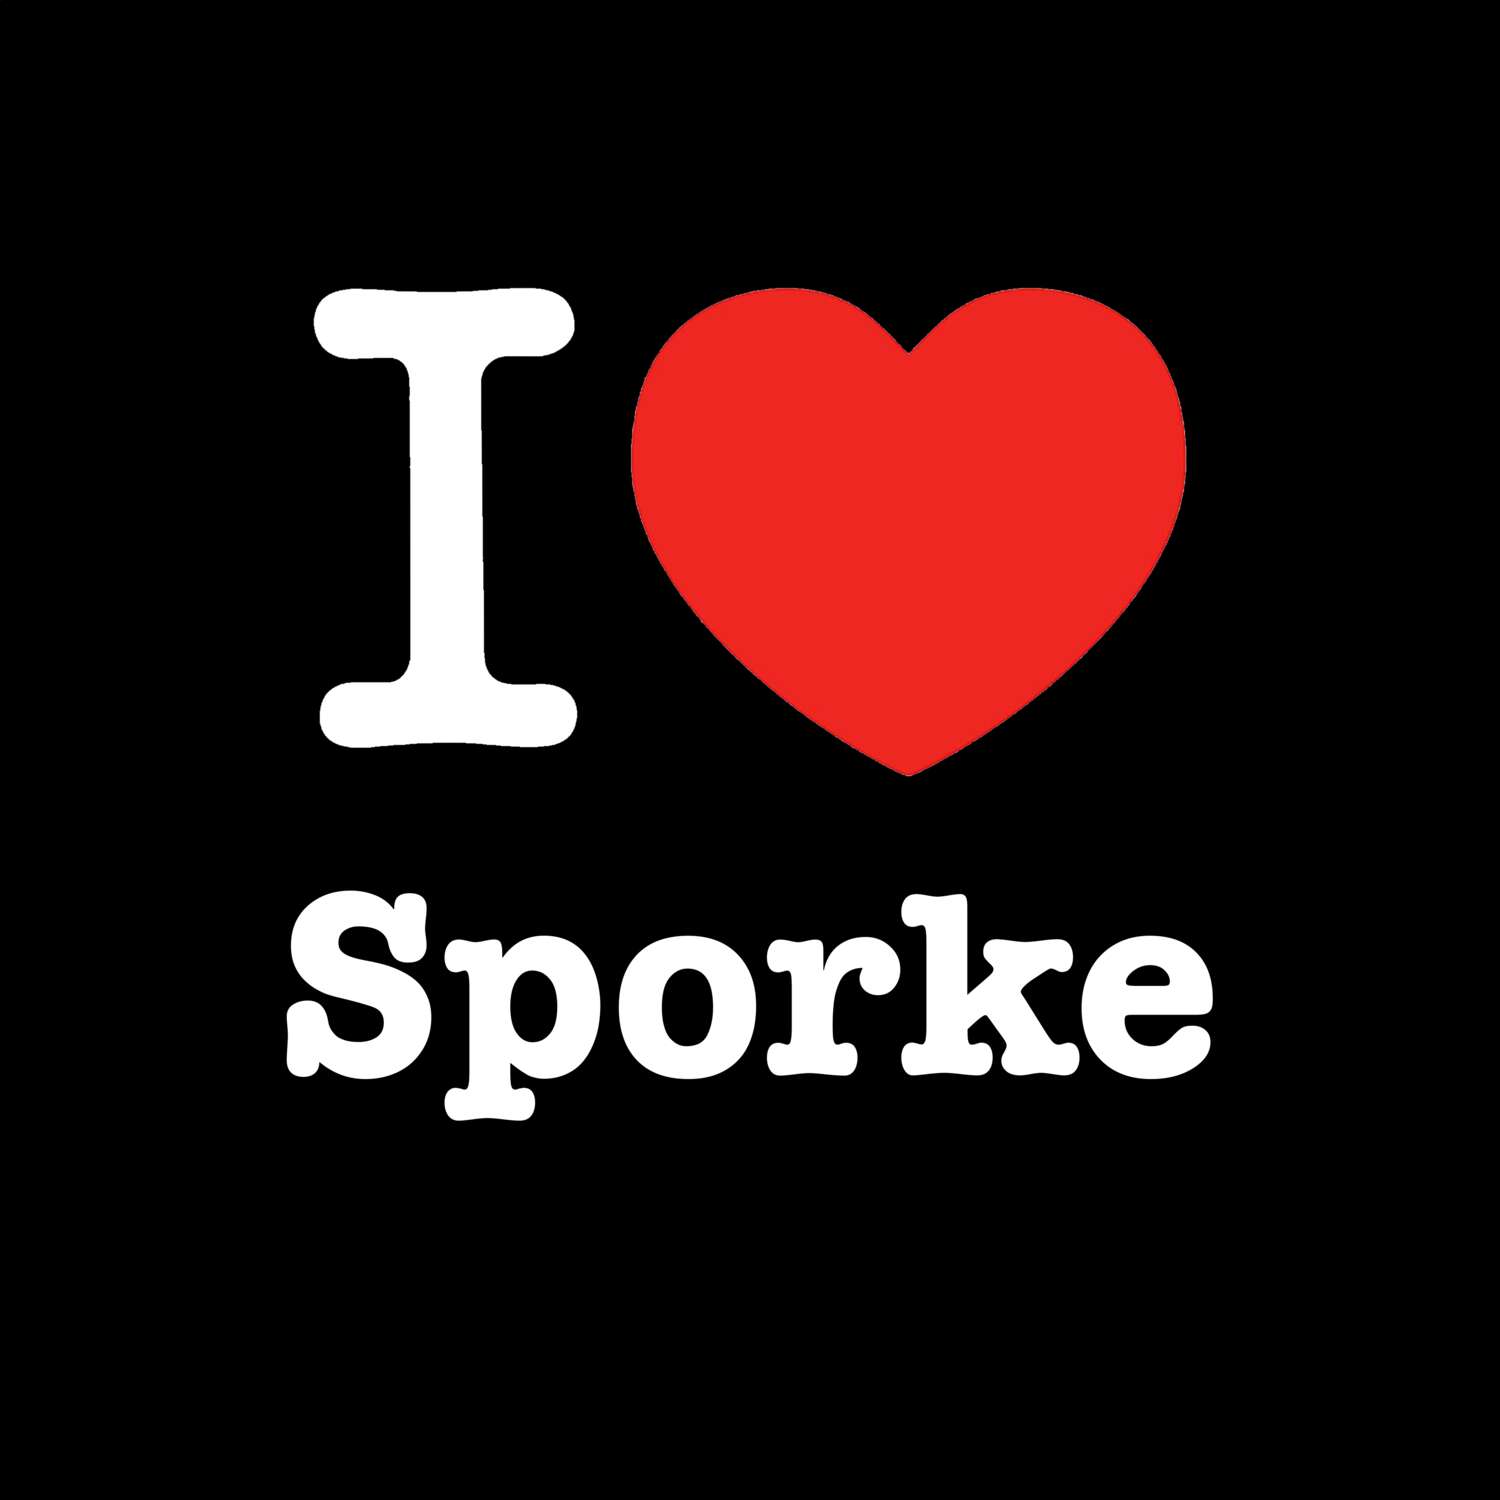 Sporke T-Shirt »I love«